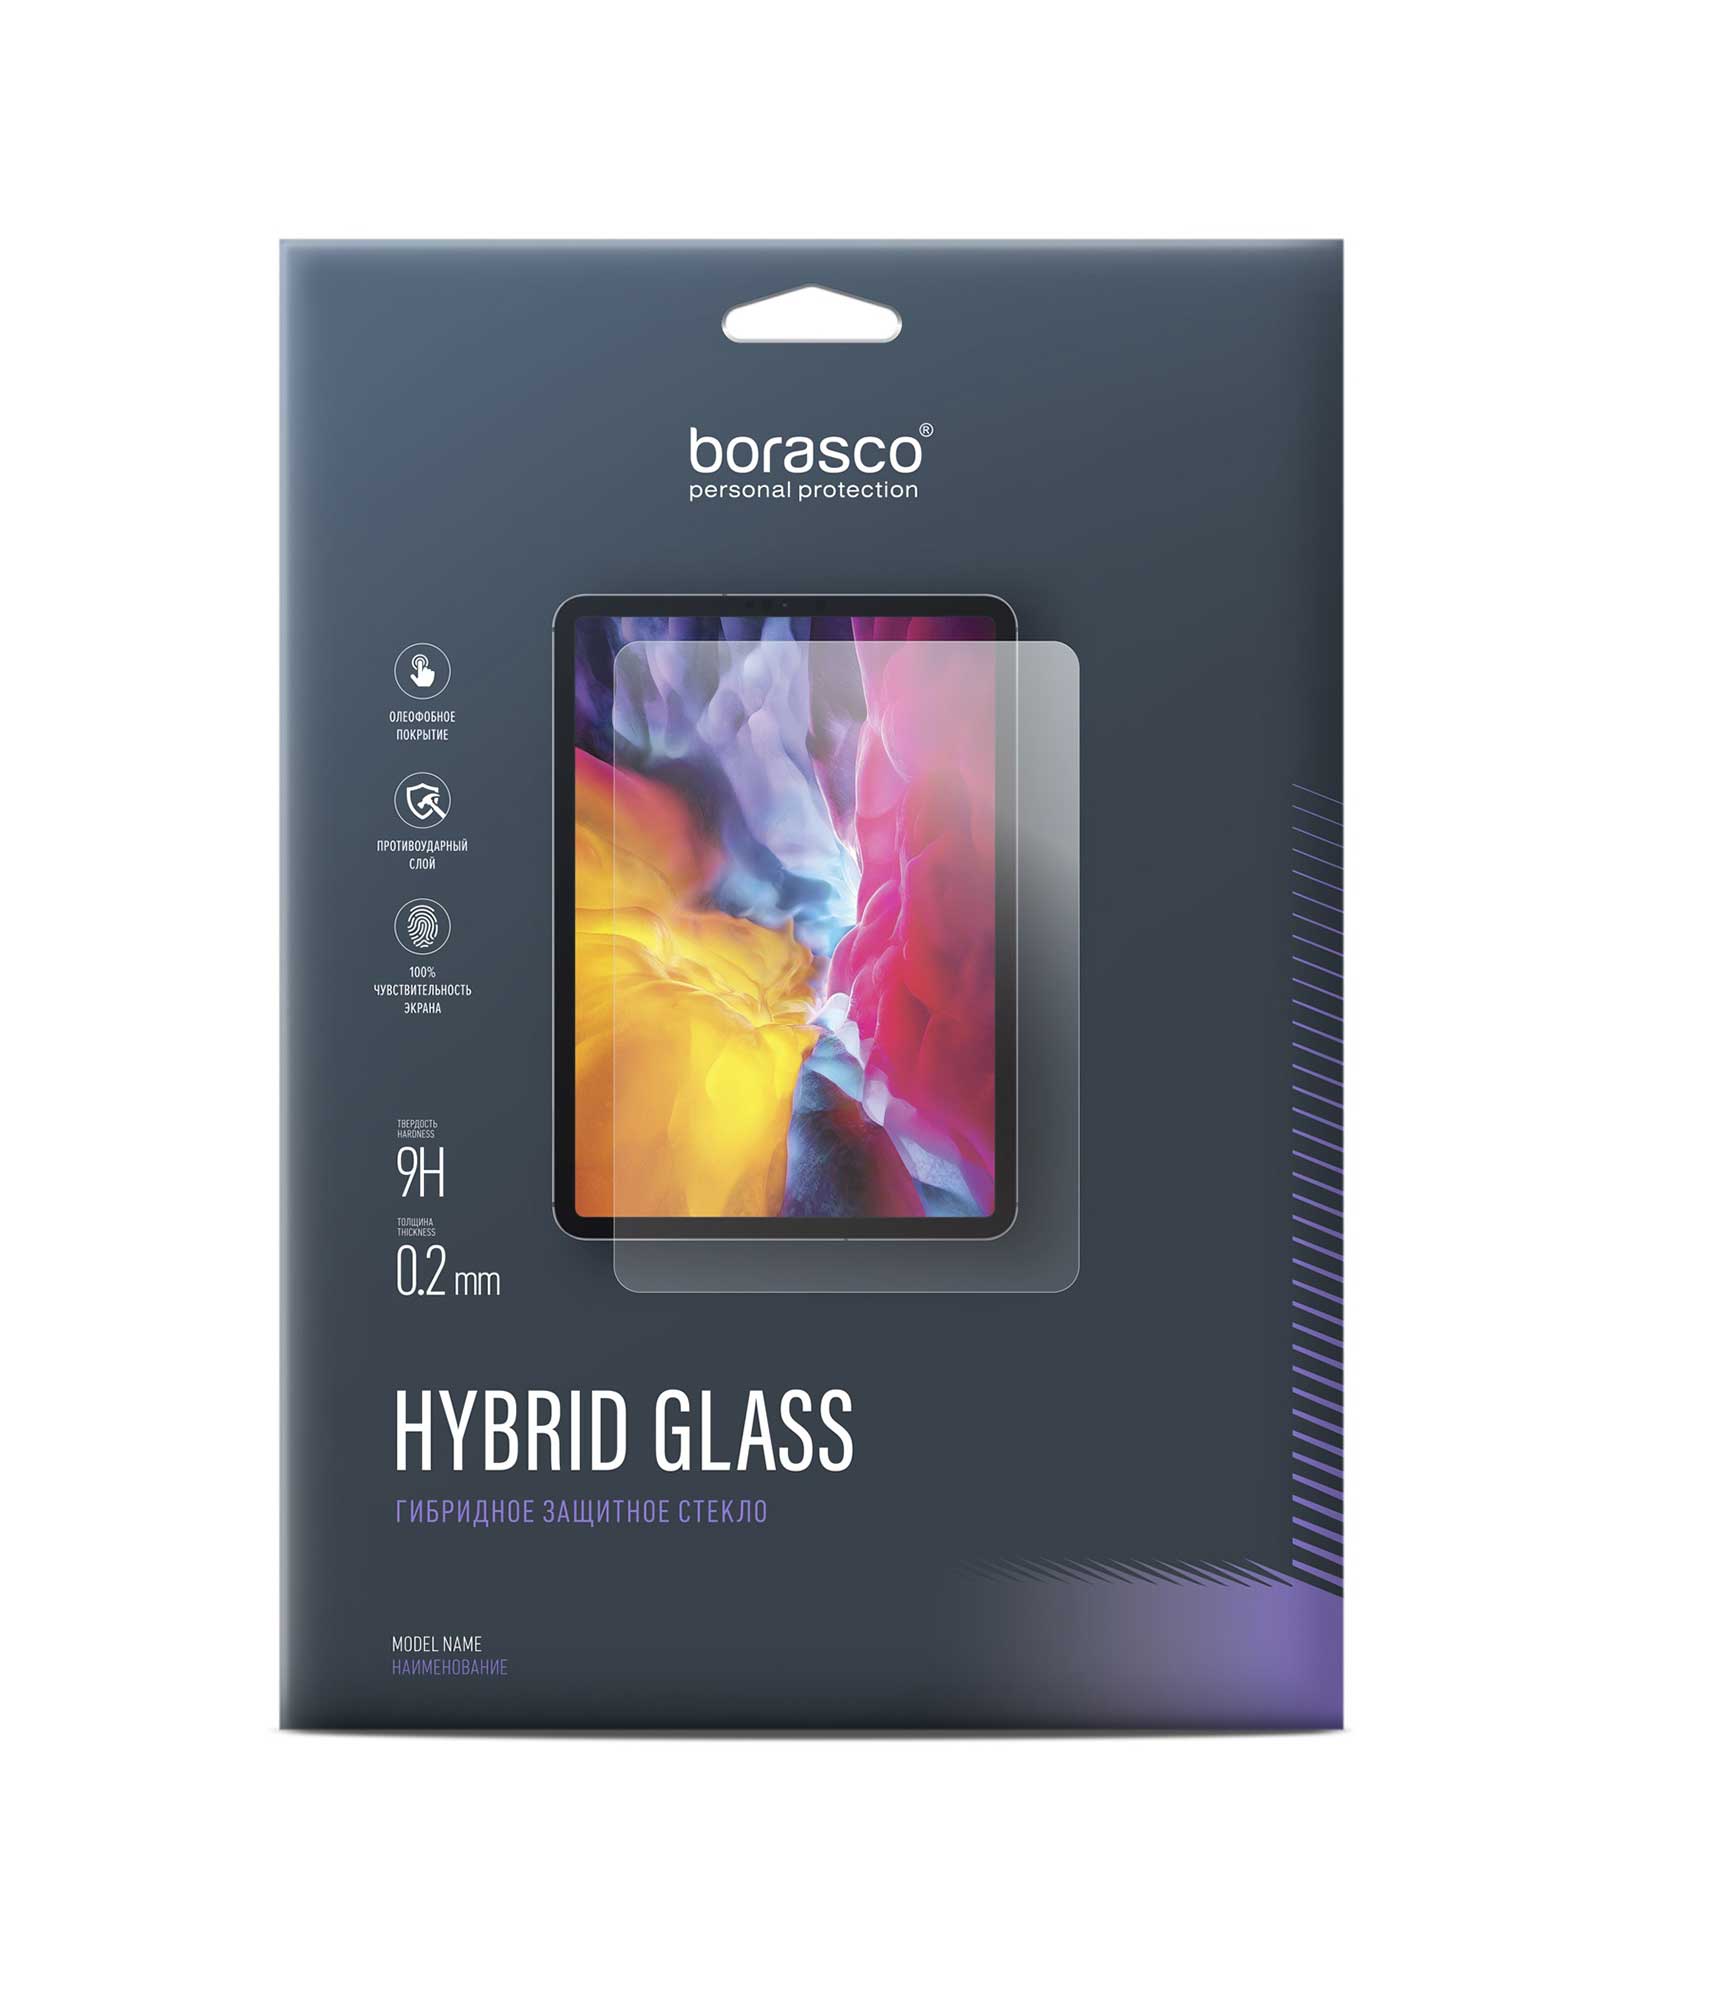 Защитное стекло BoraSCO Hybrid Glass для Lenovo Yoga Tab 11 (YT-J706X), 11.0 10 1 lcd прозрачная защита для экрана для lenovo yoga tab 3 10 plus x703 x703f yt x703l yt x703x жк дисплей экран для lenovo x703 запасная часть для замены процессора изобр